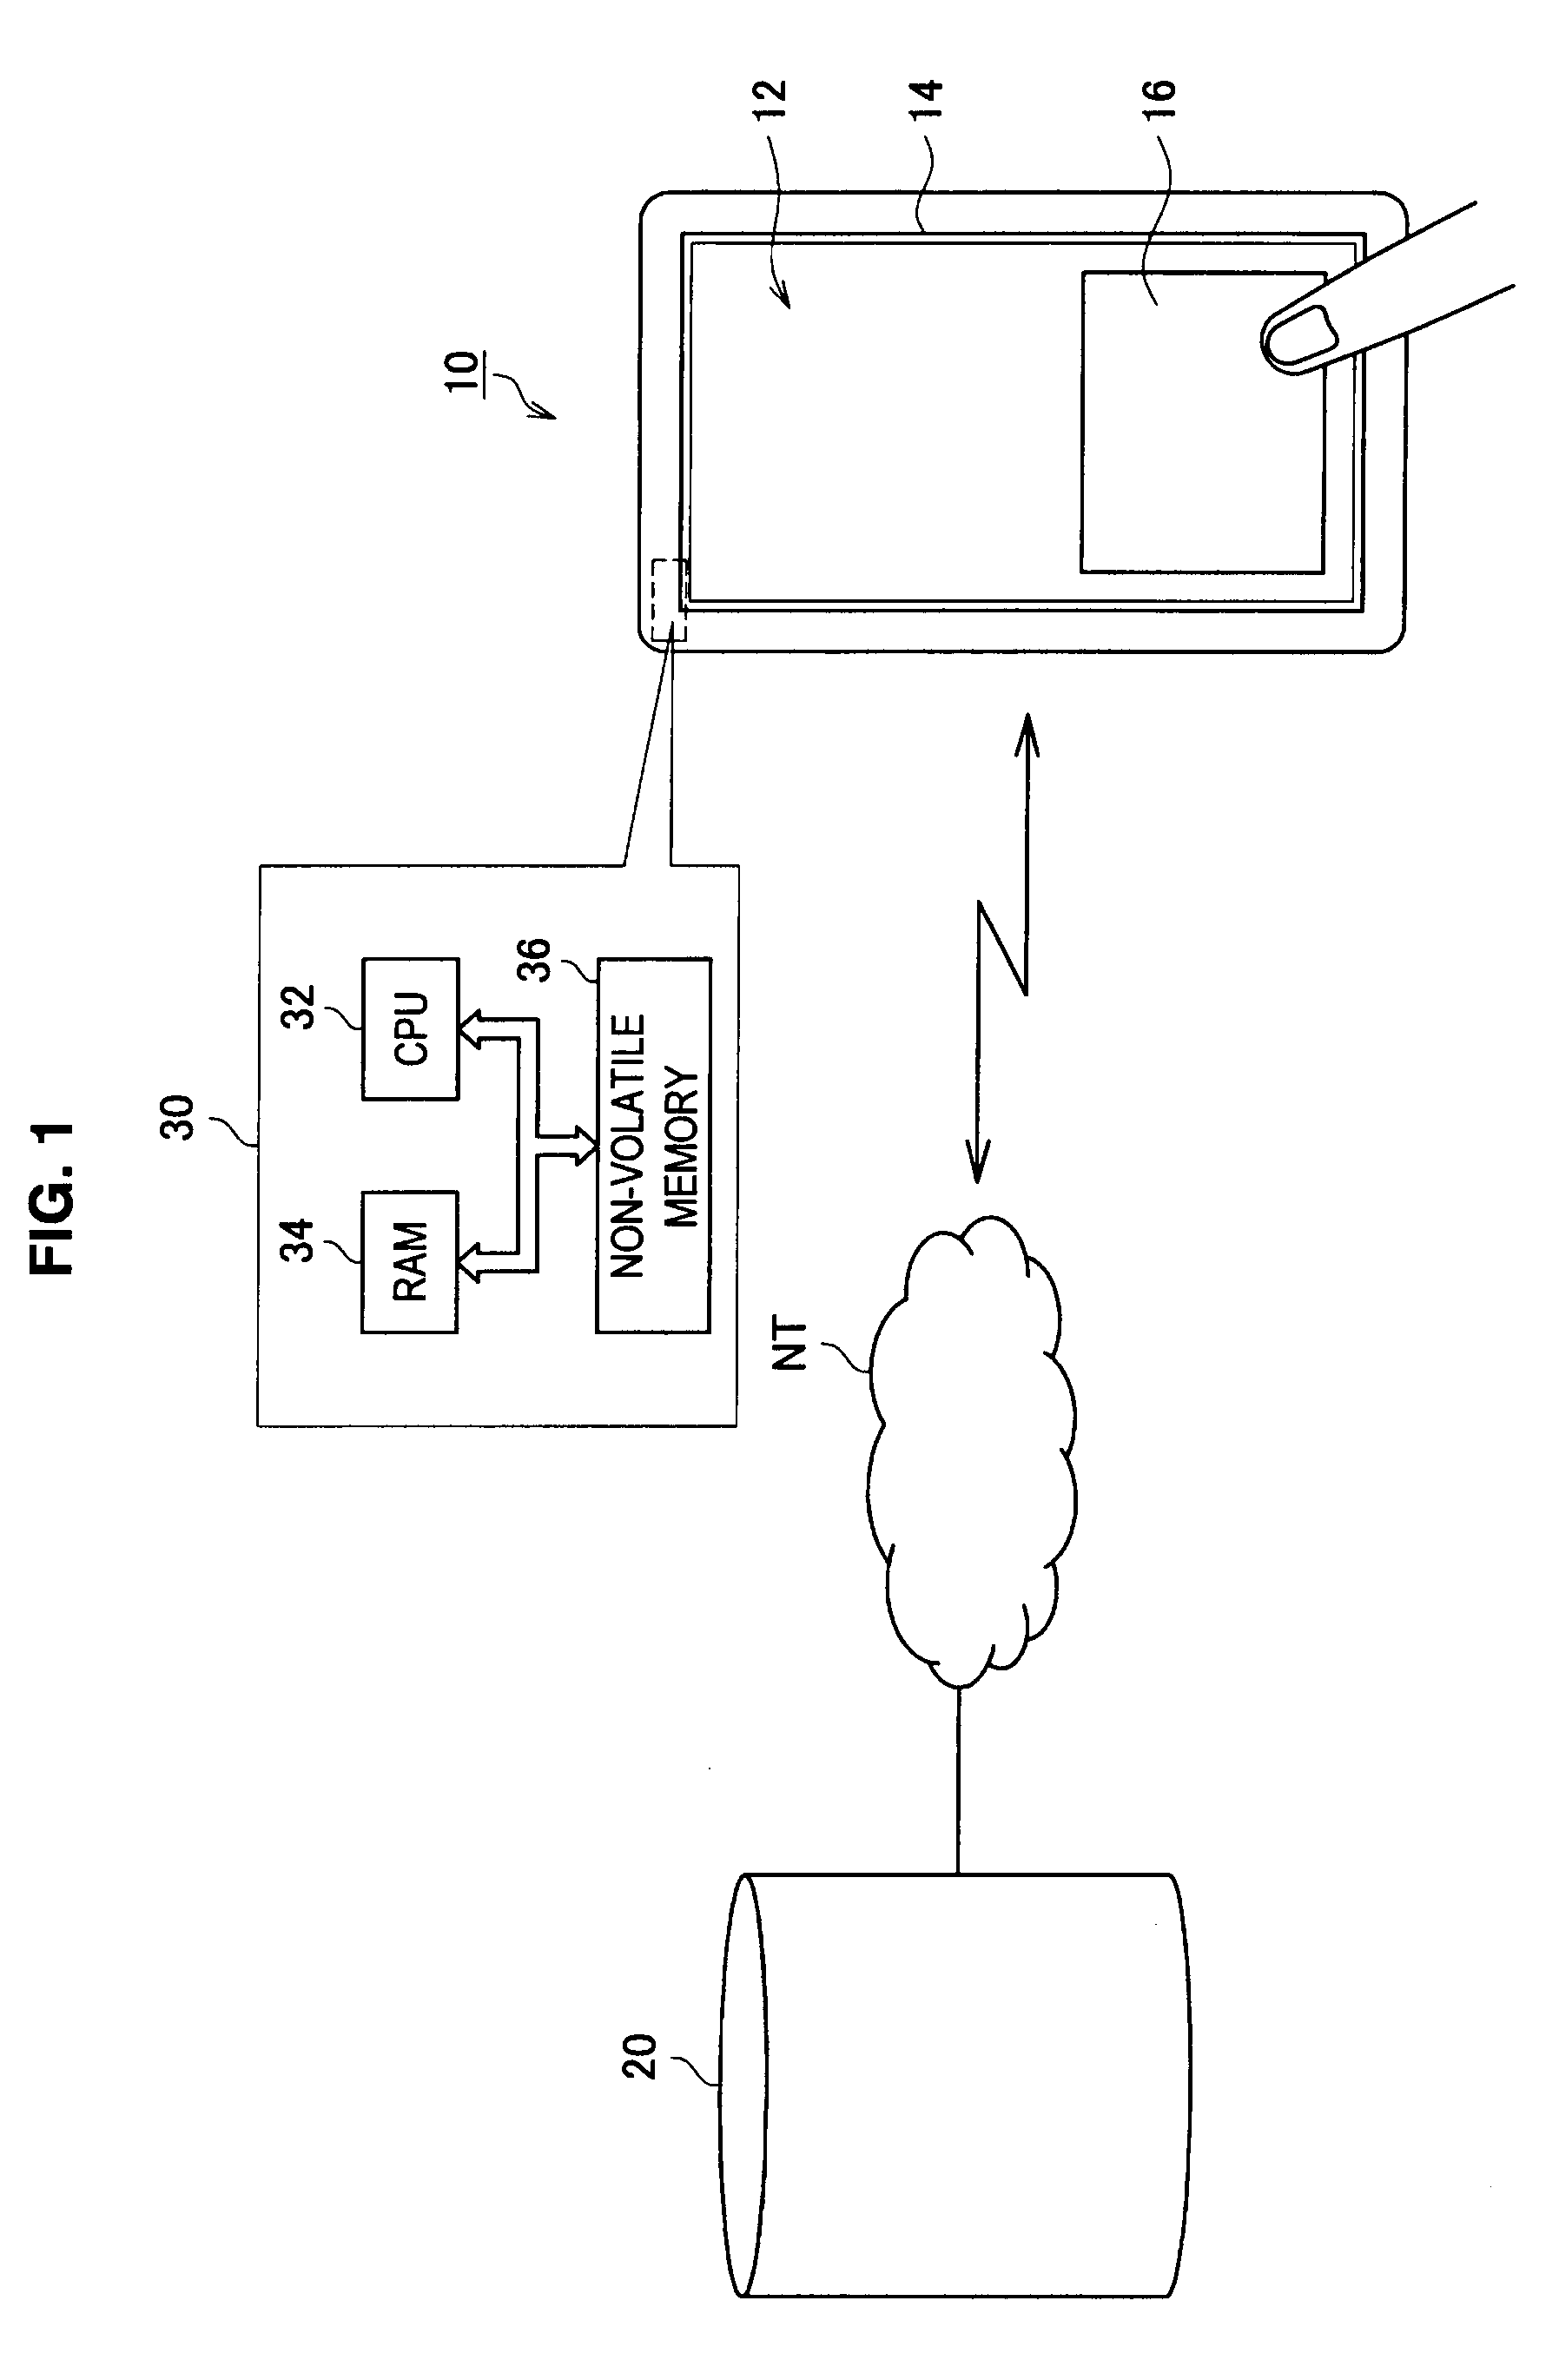 Display apparatus, display method, and program